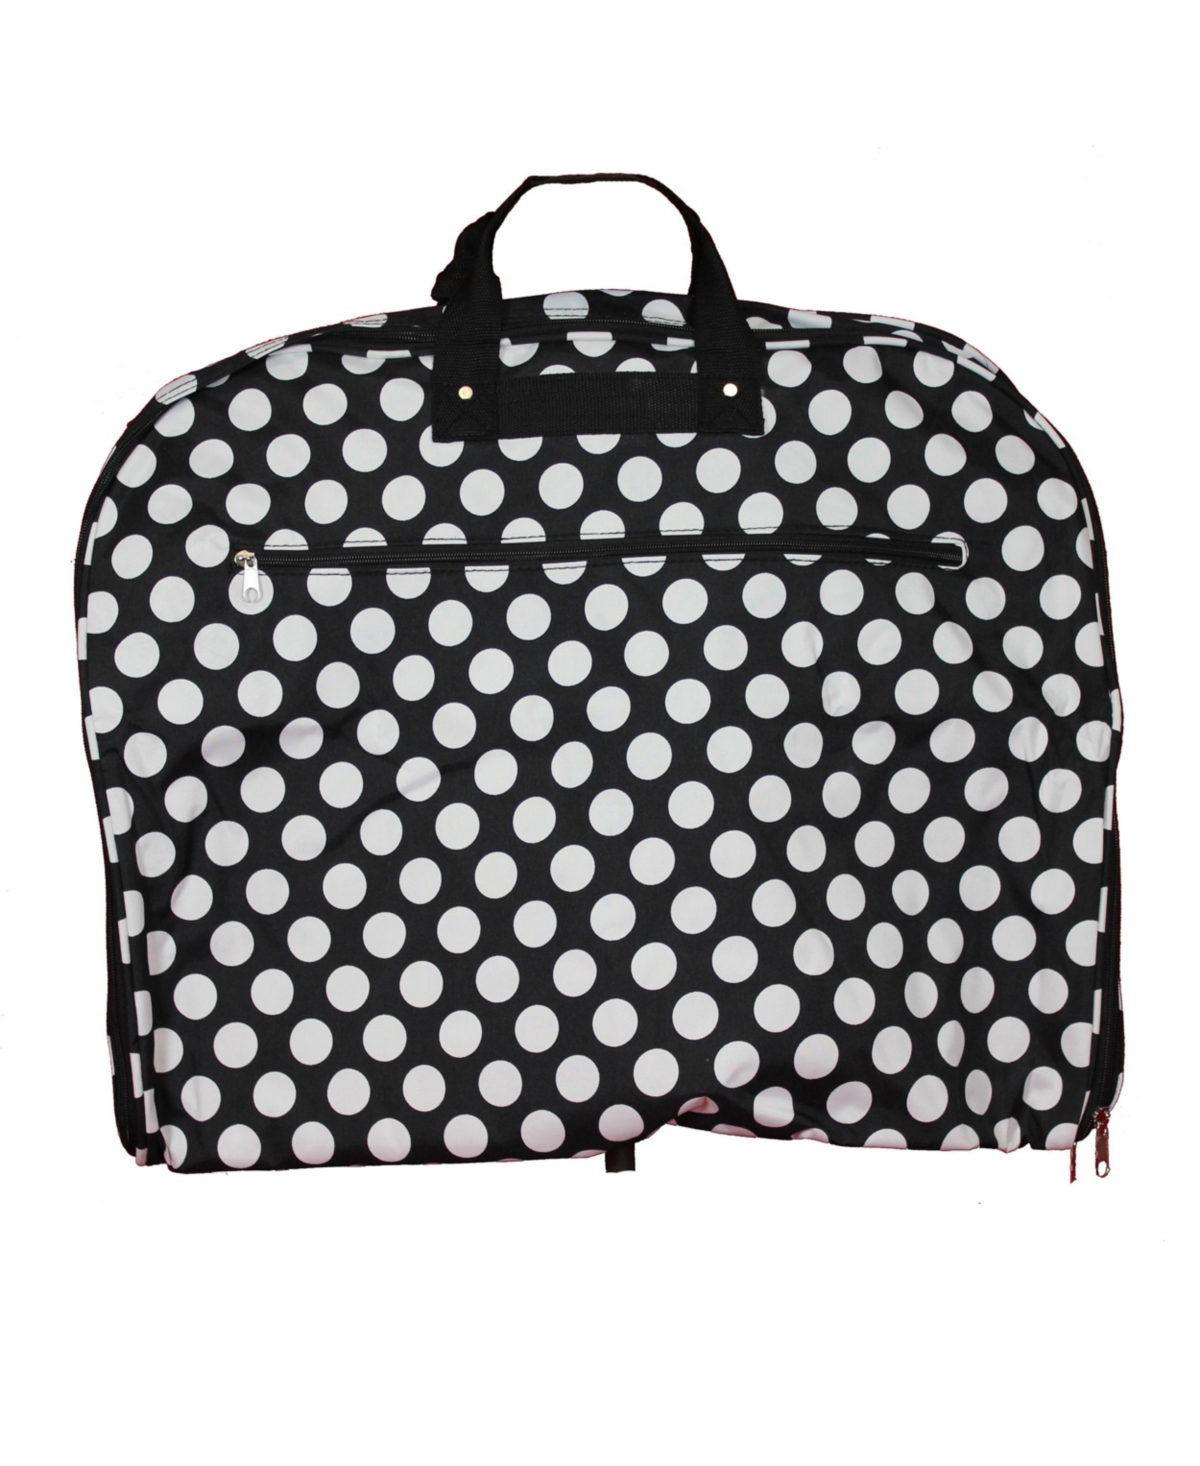 Dots 40-inch Hanging Luggage Garment Bag - New black white dot